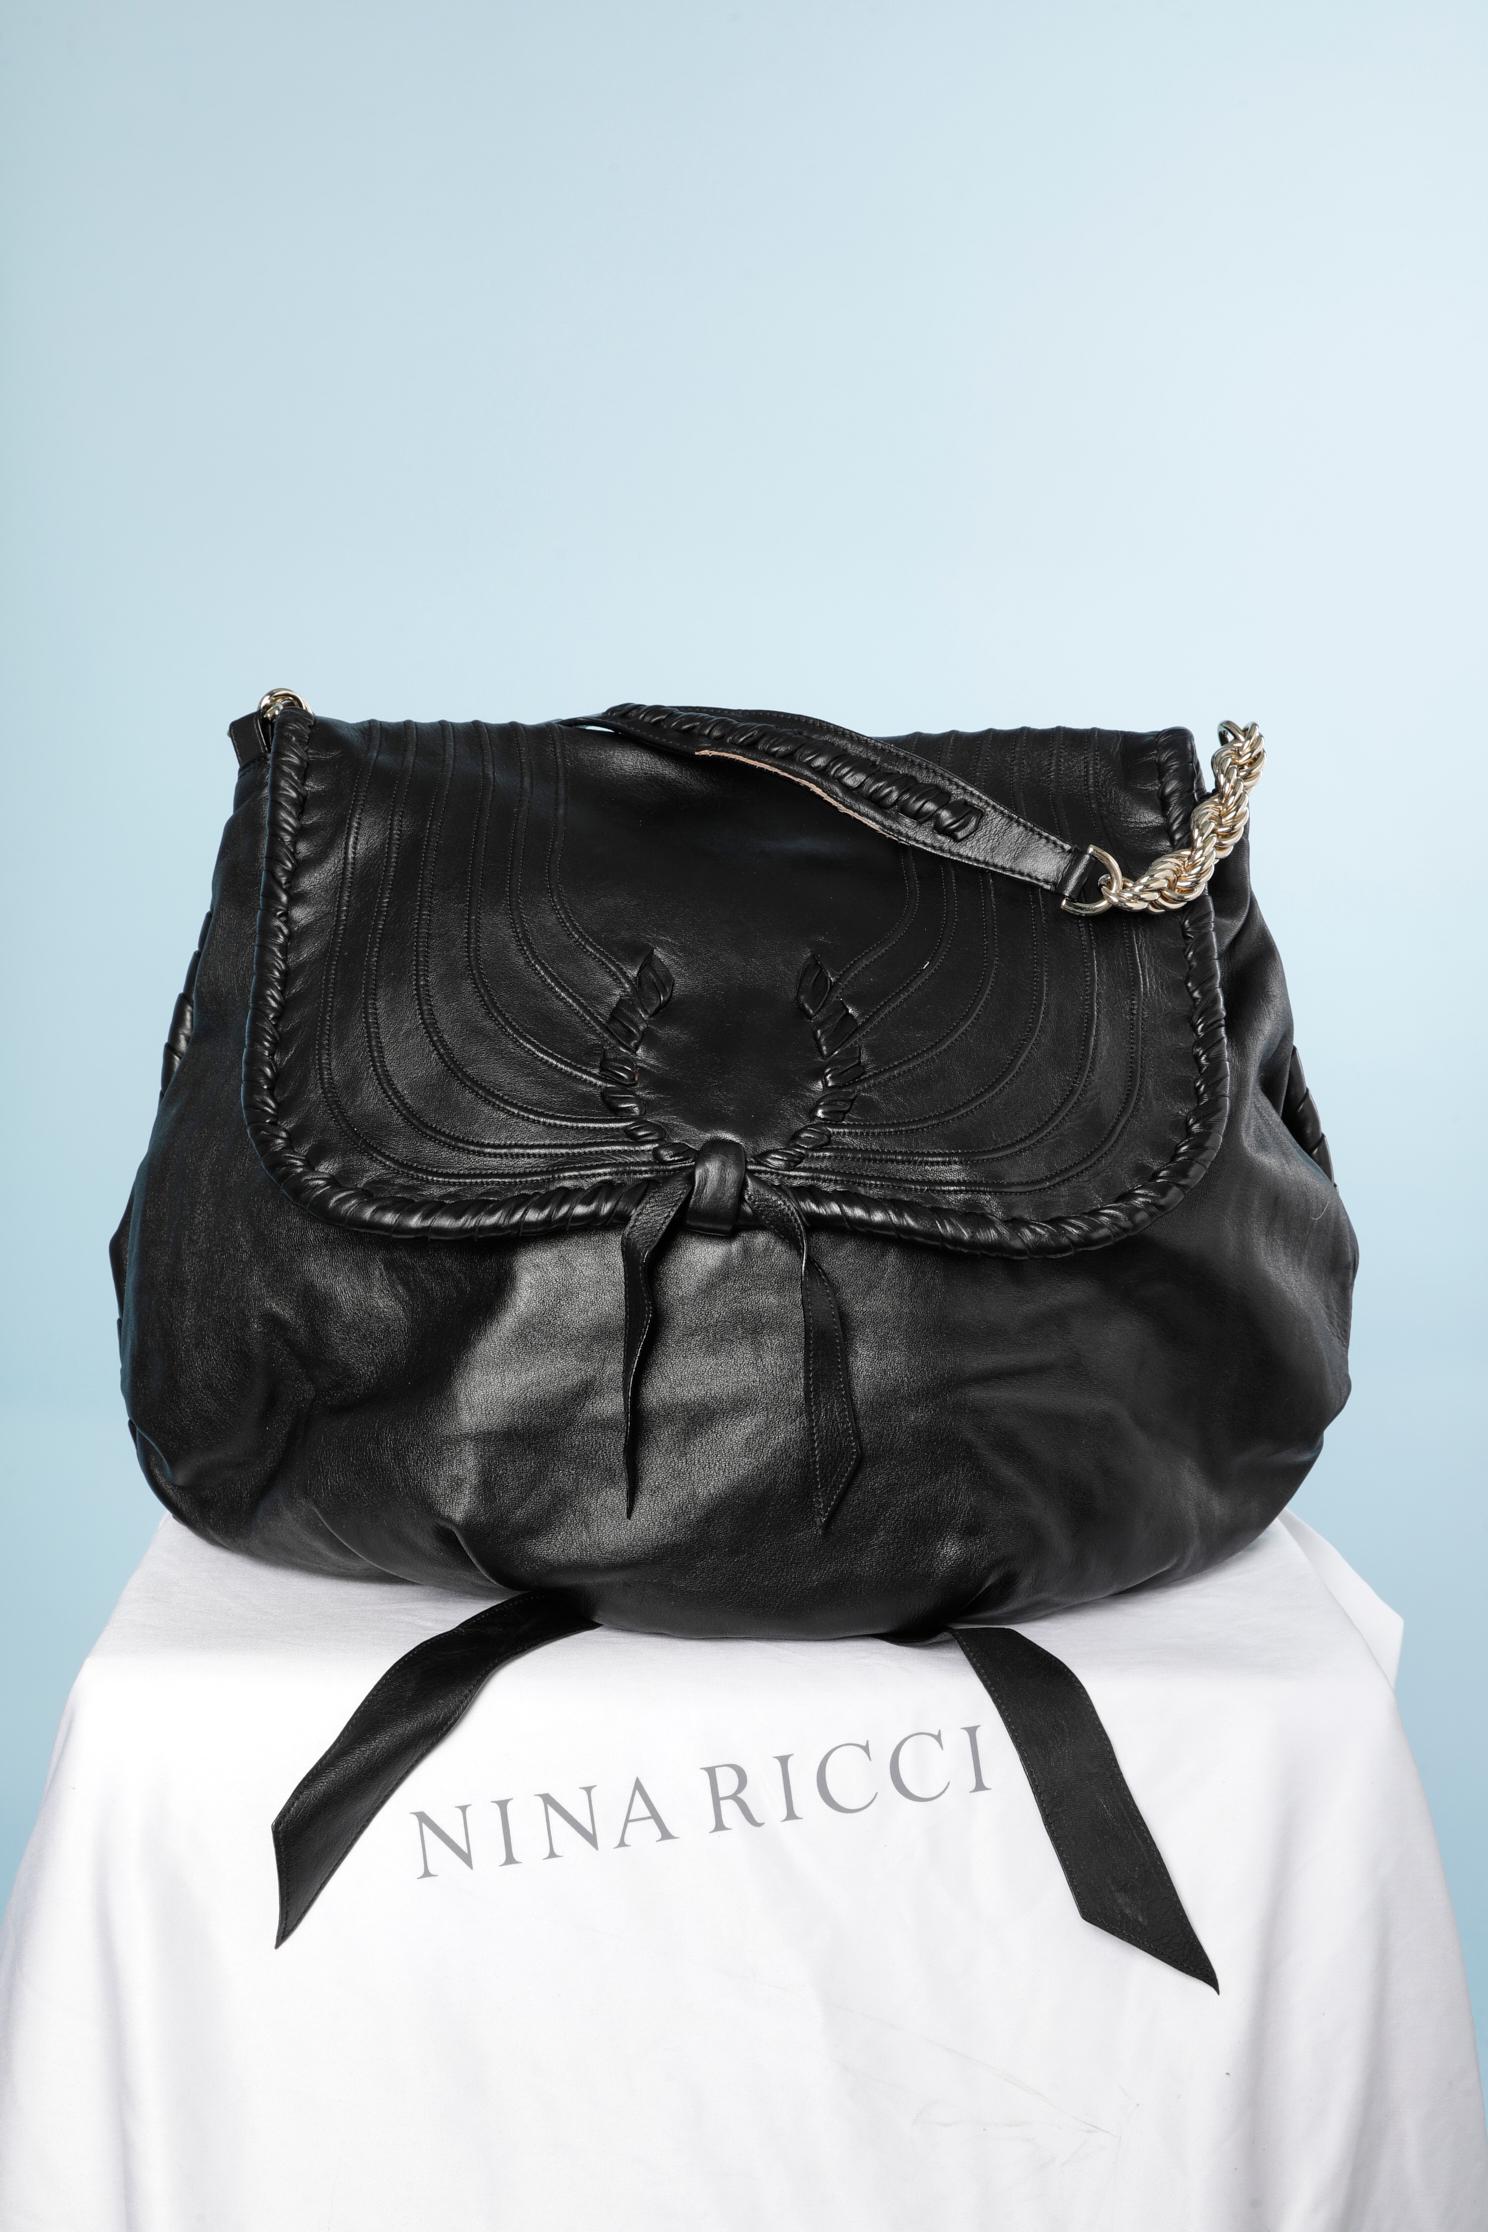 Black soft leather shoulder bag with topstitching.
Size: 55 cm X 45 cm 
Strap length: 50 cm 
Dust-bag provided 